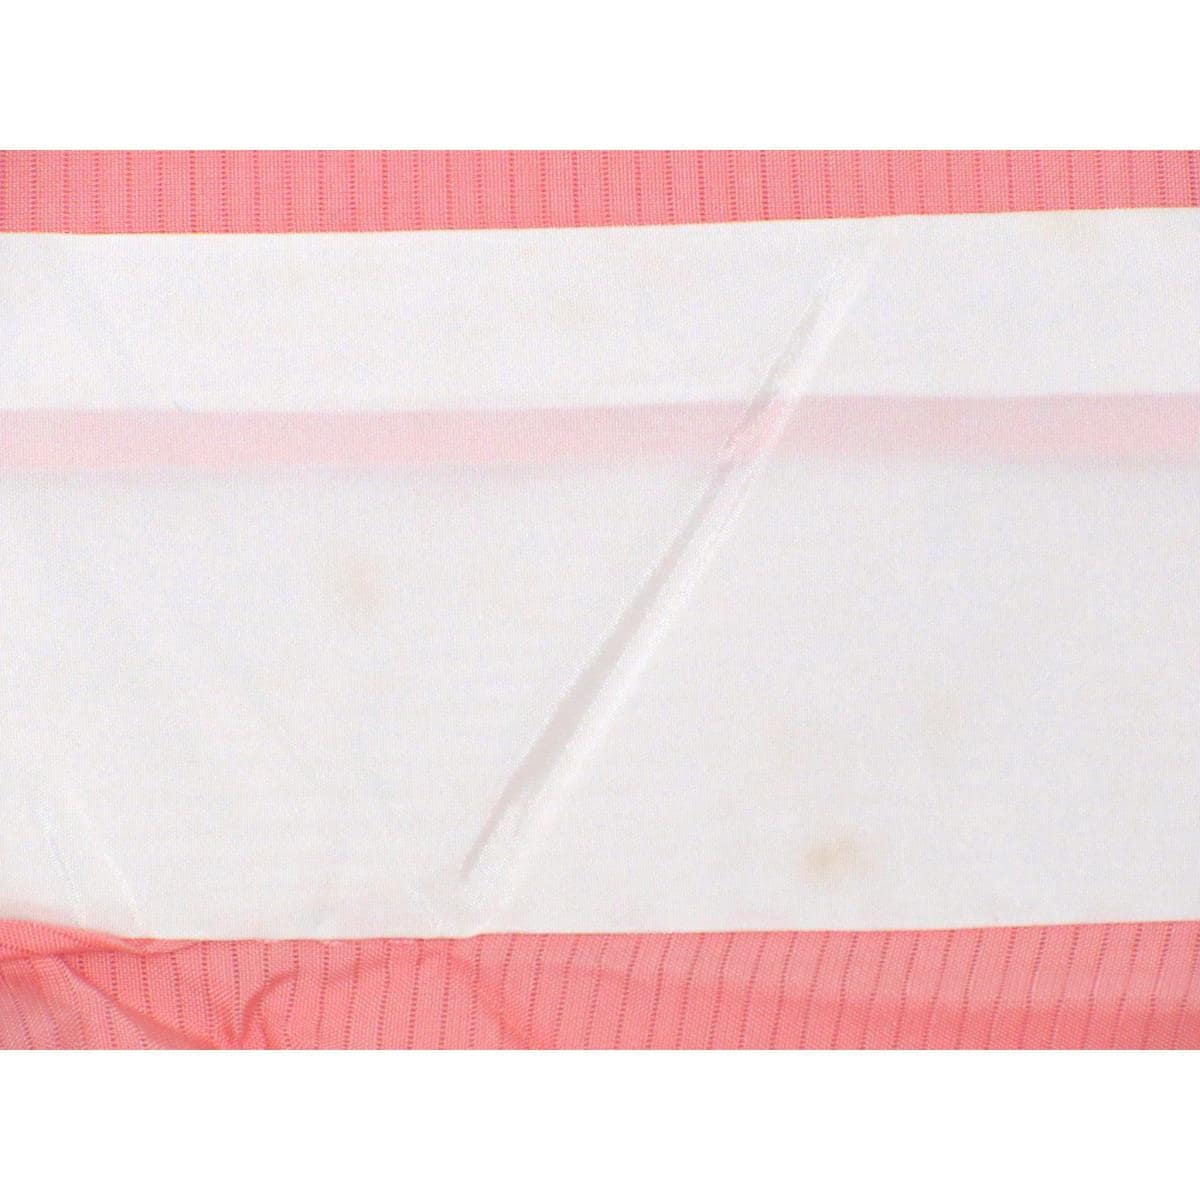 [Unused items] Single layer, silk weave, plain color